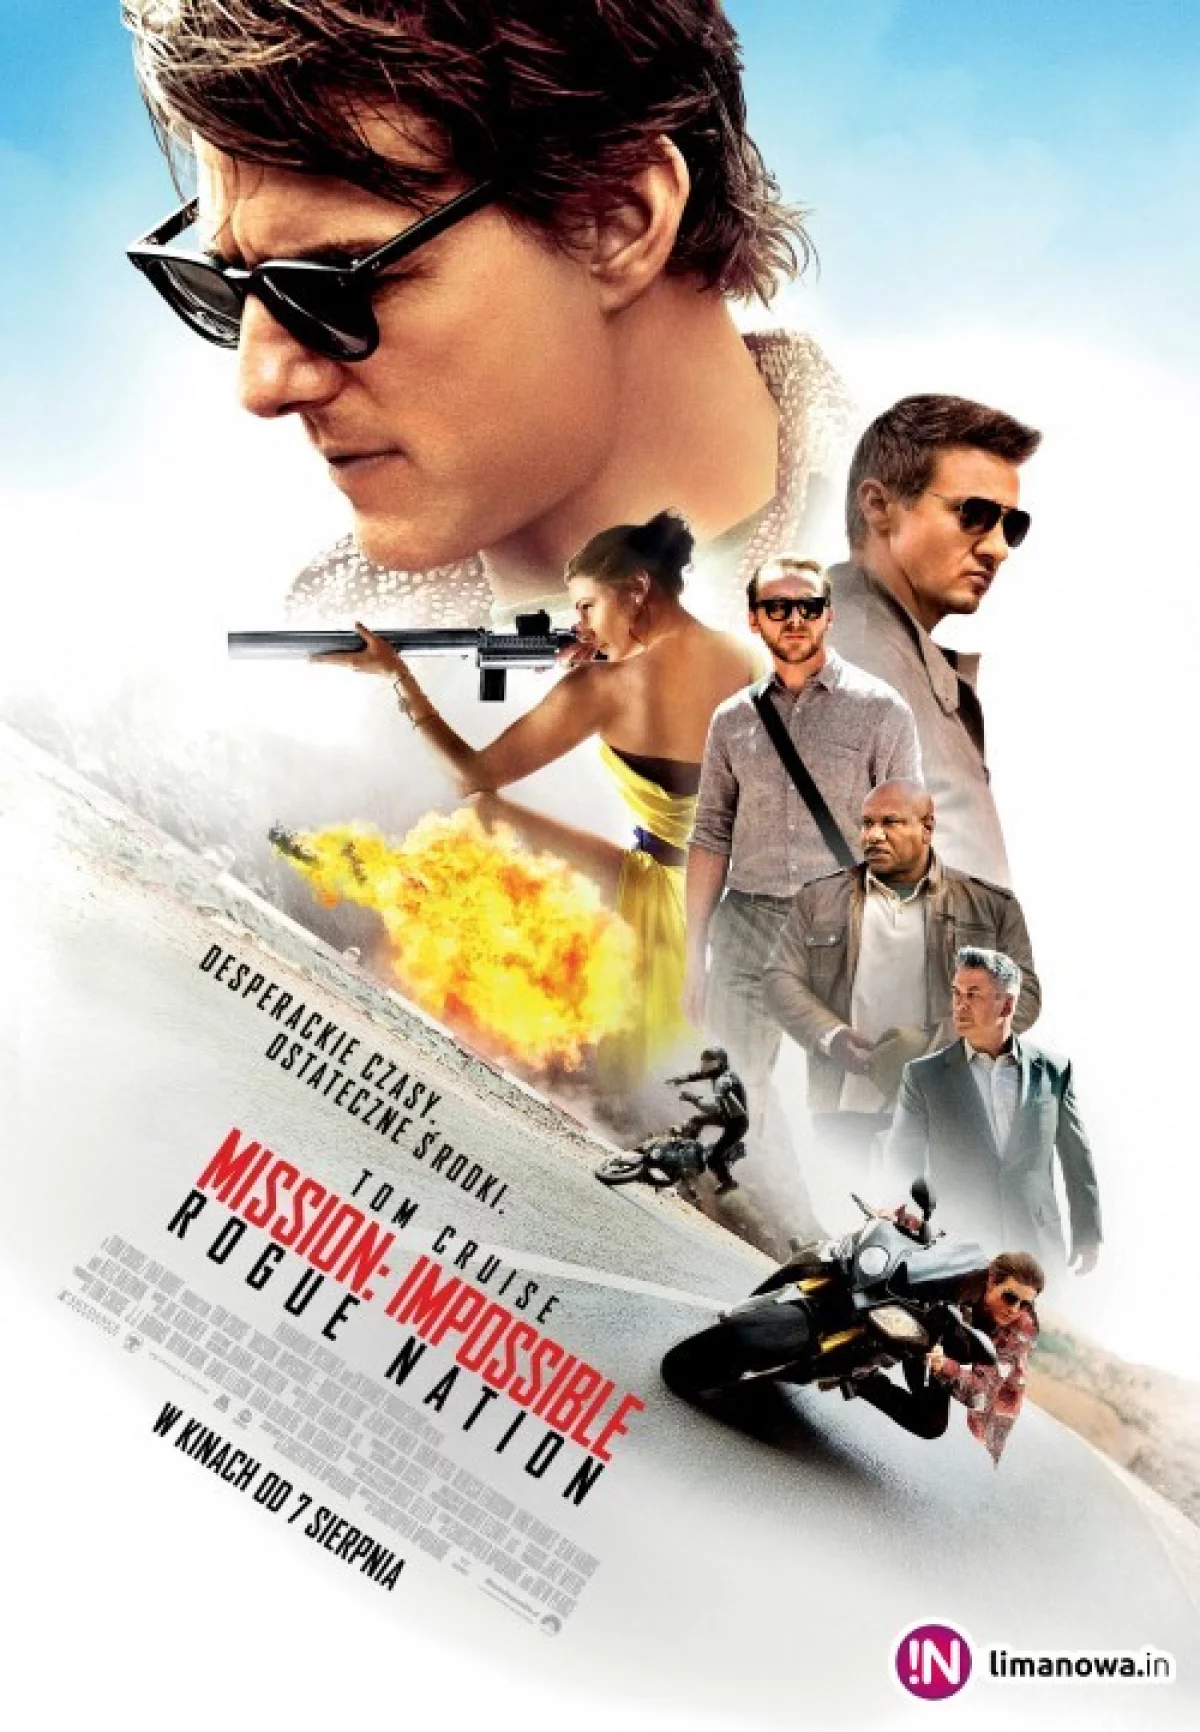 „Piksele” i „Mission: Impossible – Rogue Nation” w kinie Klaps od 28 sierpnia